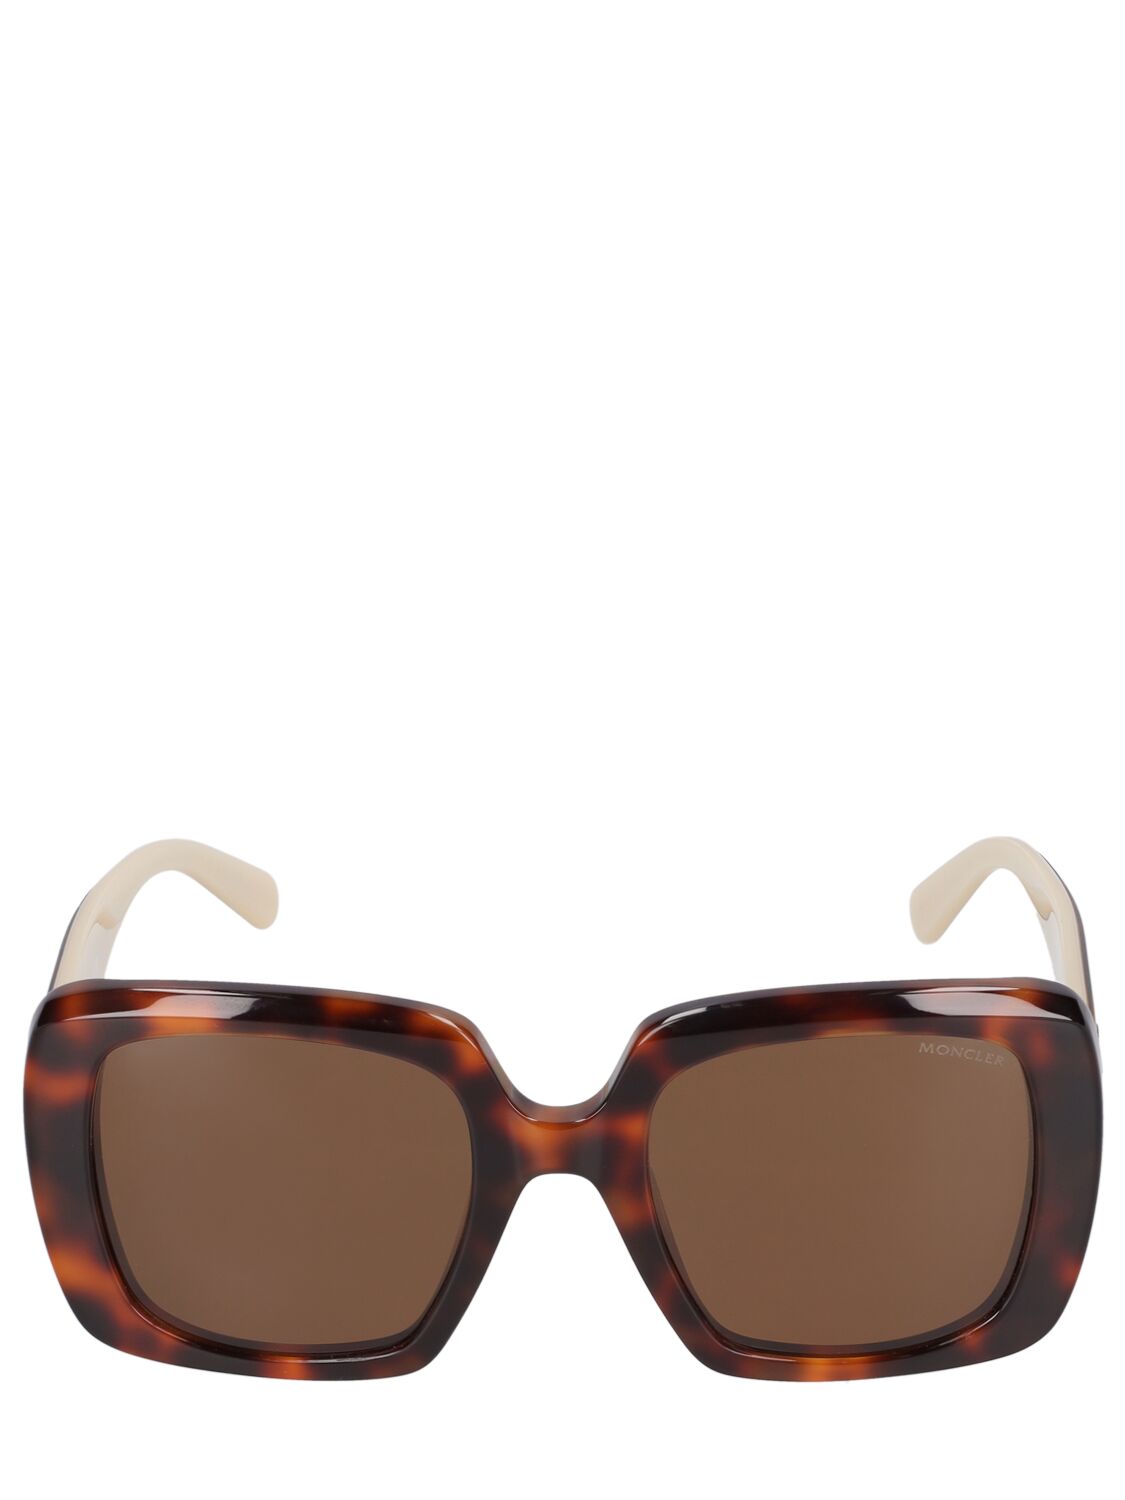 Image of Blanche Acetate Squared Sunglasses